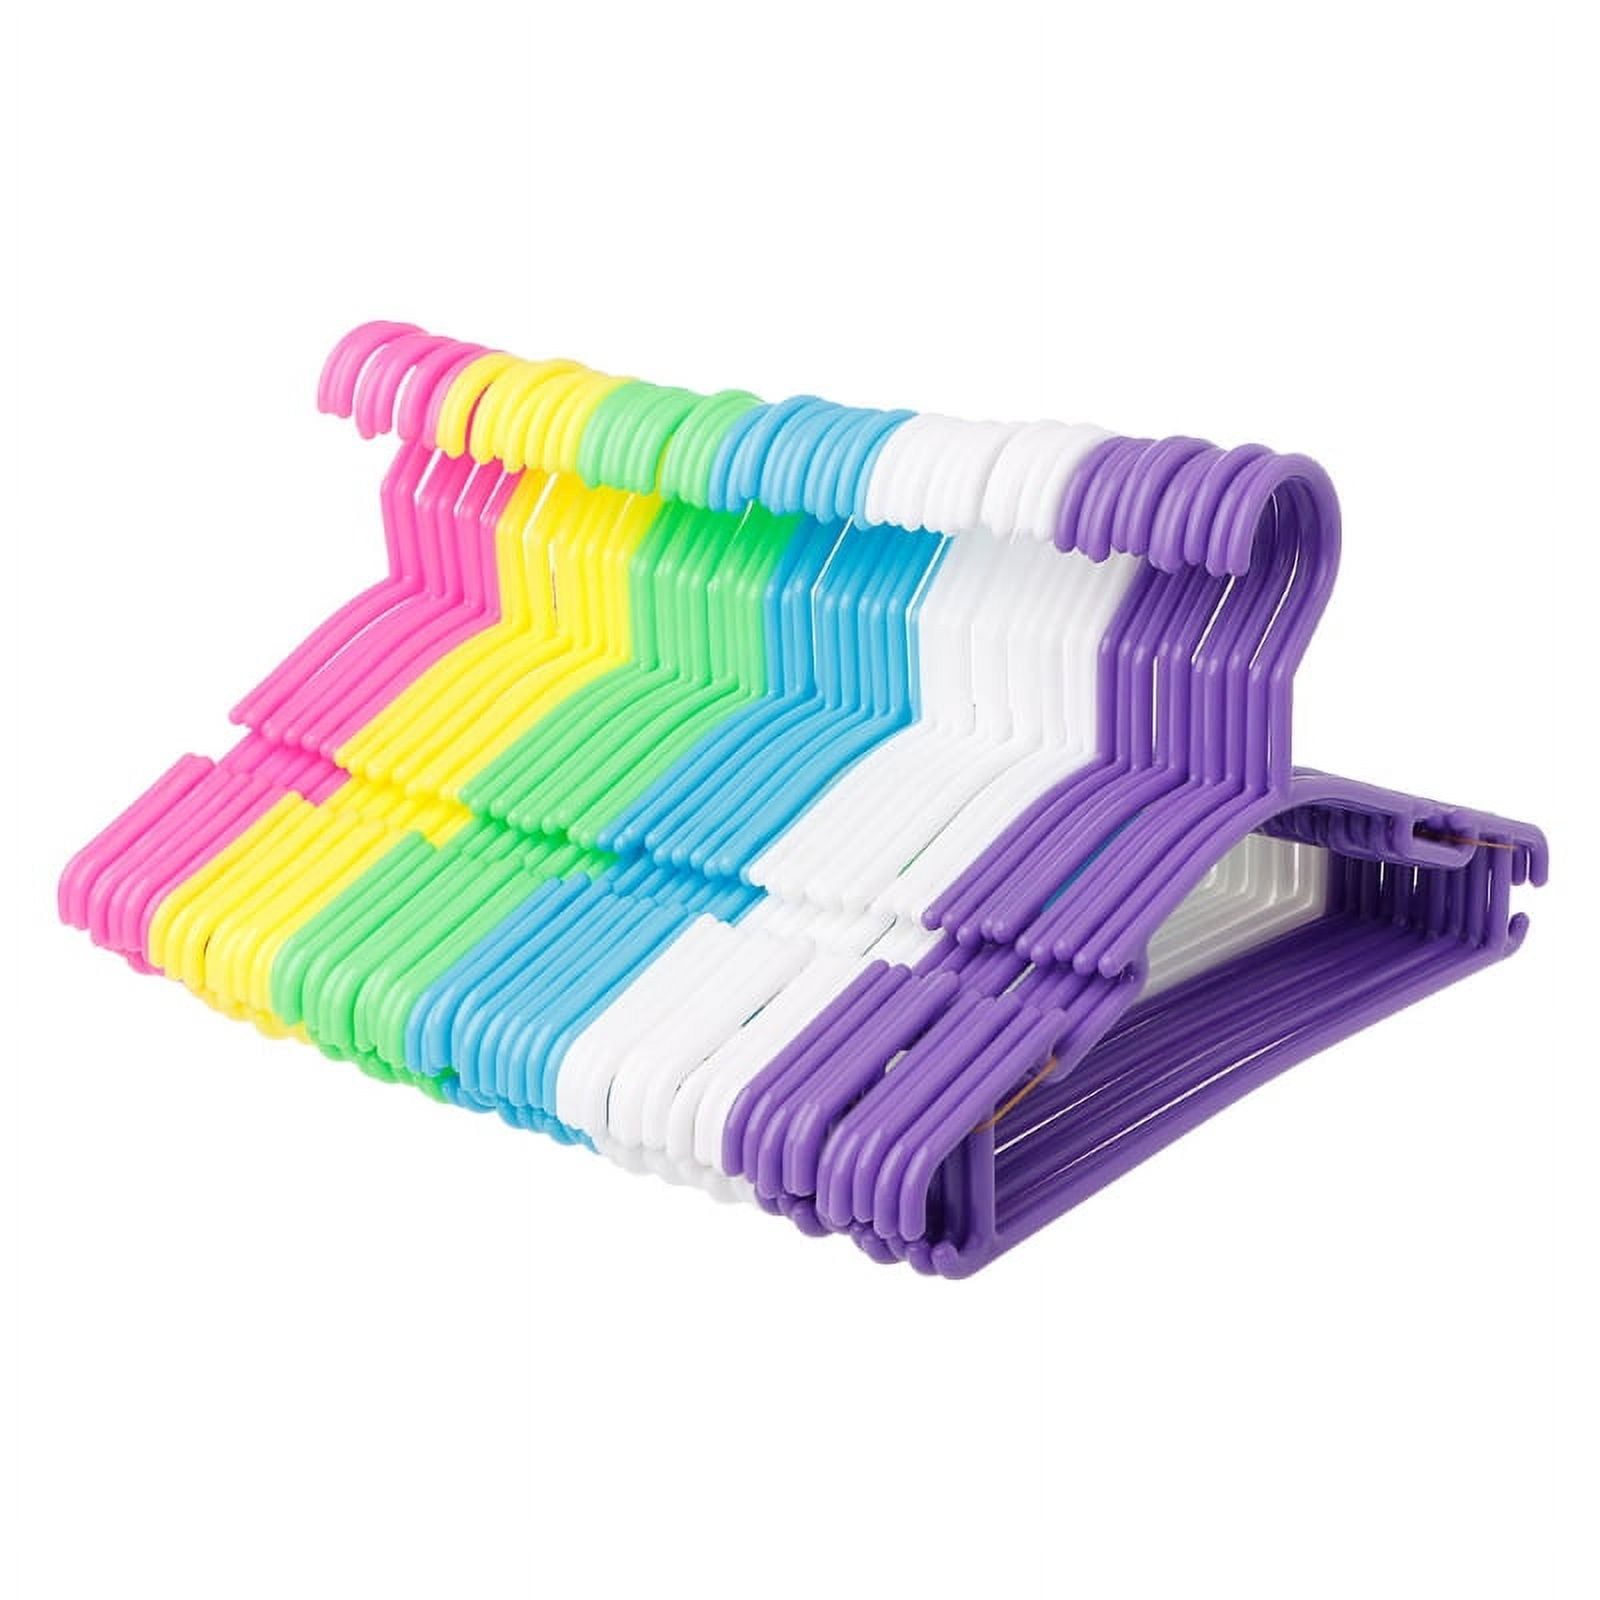 Buy Coles Coloured Kids Hangers 10 pack